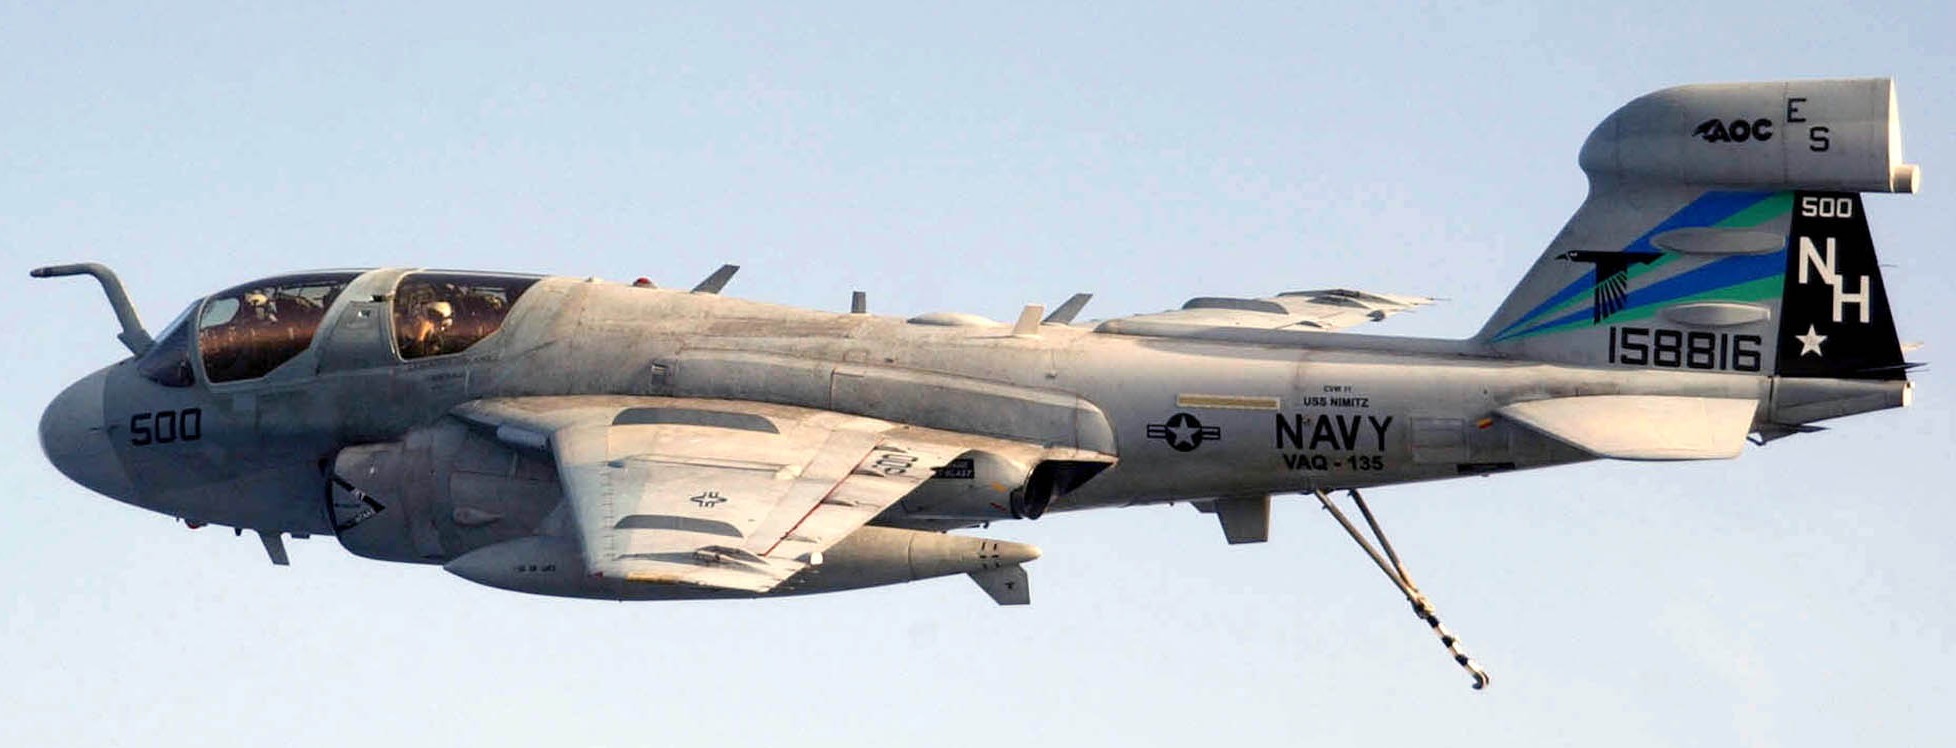 vaq-135 black ravens electronic attack squadron vaqron us navy gruman ea-6b prowler cvw-11 uss nimitz cvn-68 15